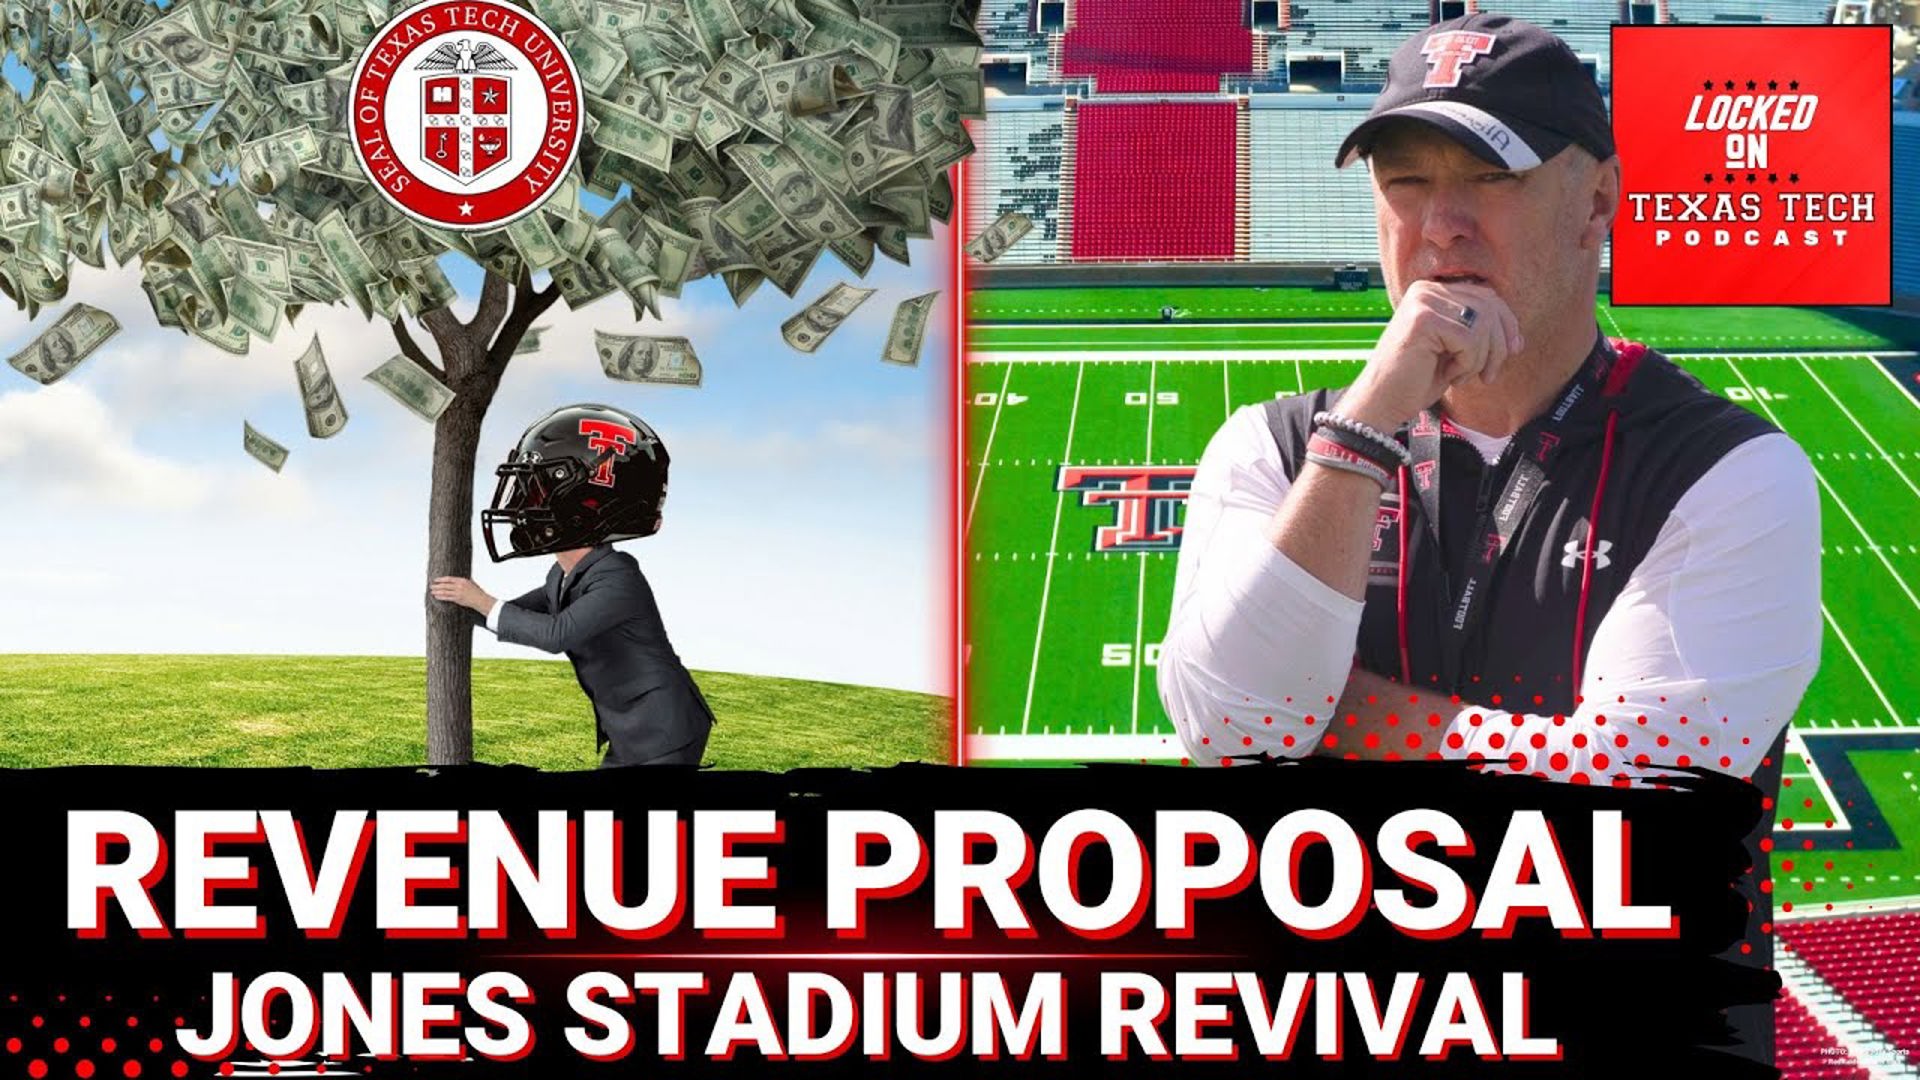 Today from Lubbock, TX, on Locked On Texas Tech:

- revenue split proposal
- good or bad for Texas Tech?
- Jones Stadium Revival
- THREE STRIPE WATCH